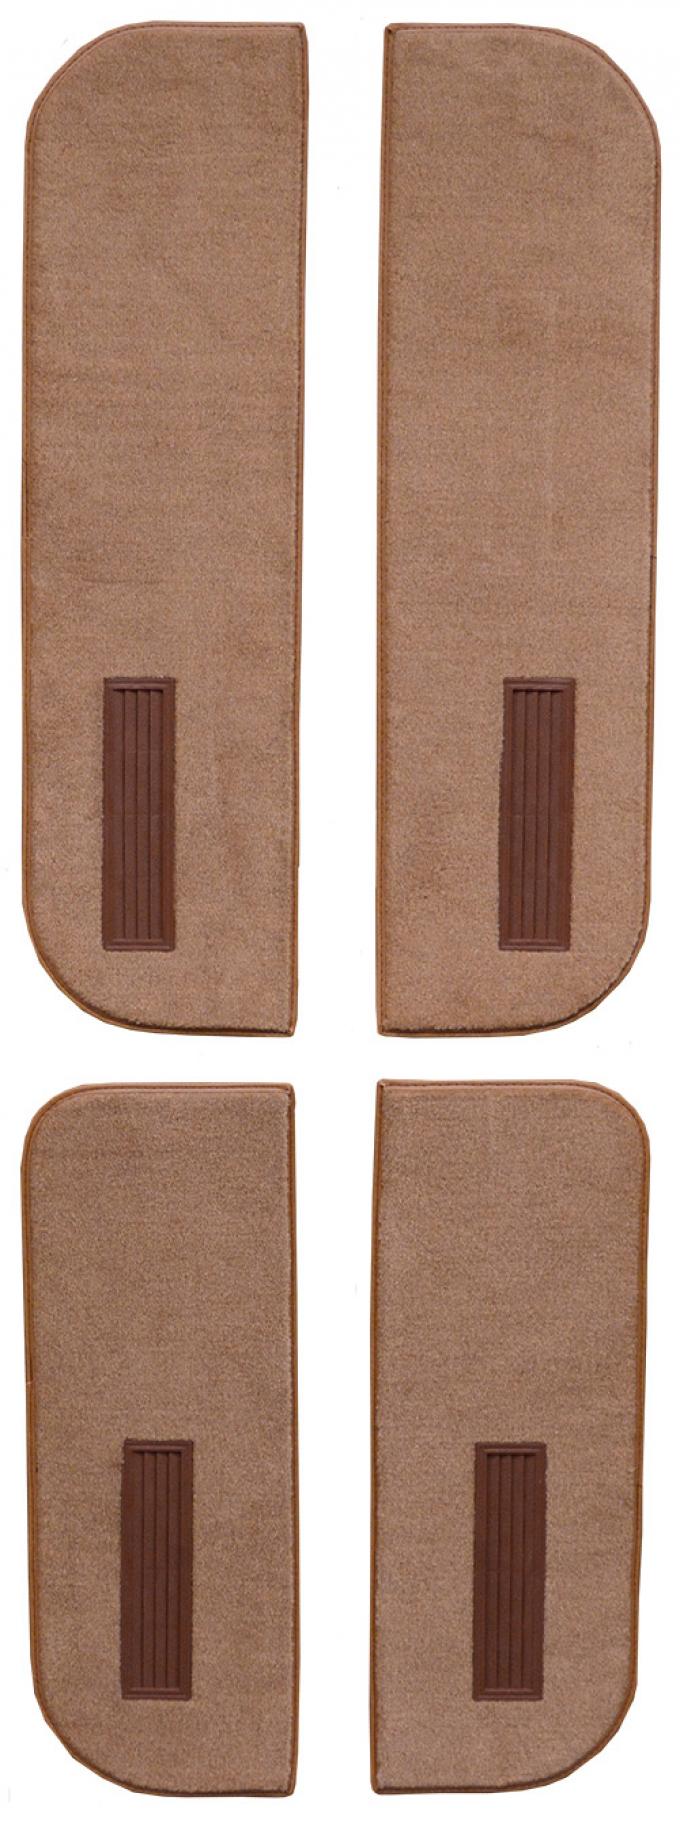 ACC 1973 GMC K15/K1500 Suburban Door Panel Inserts on Cardboard w/Vents 4pc Loop Carpet